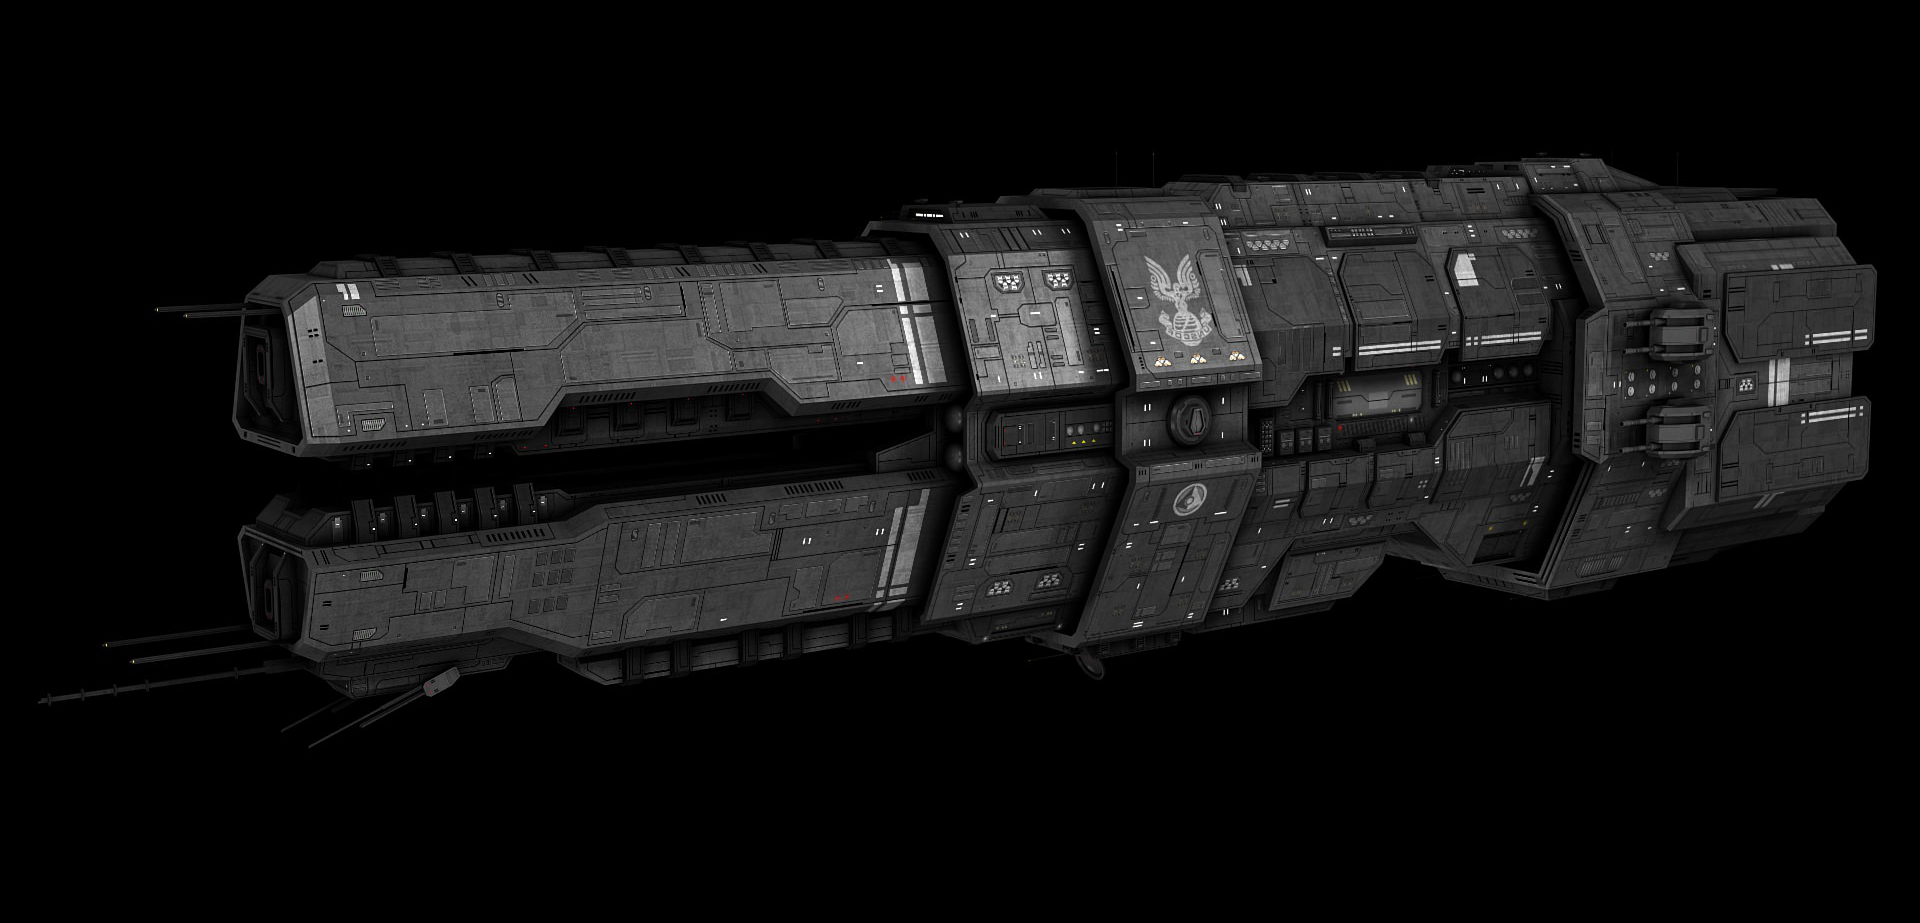 Artemis Class Battlecruiser Halo Fanon Fandom